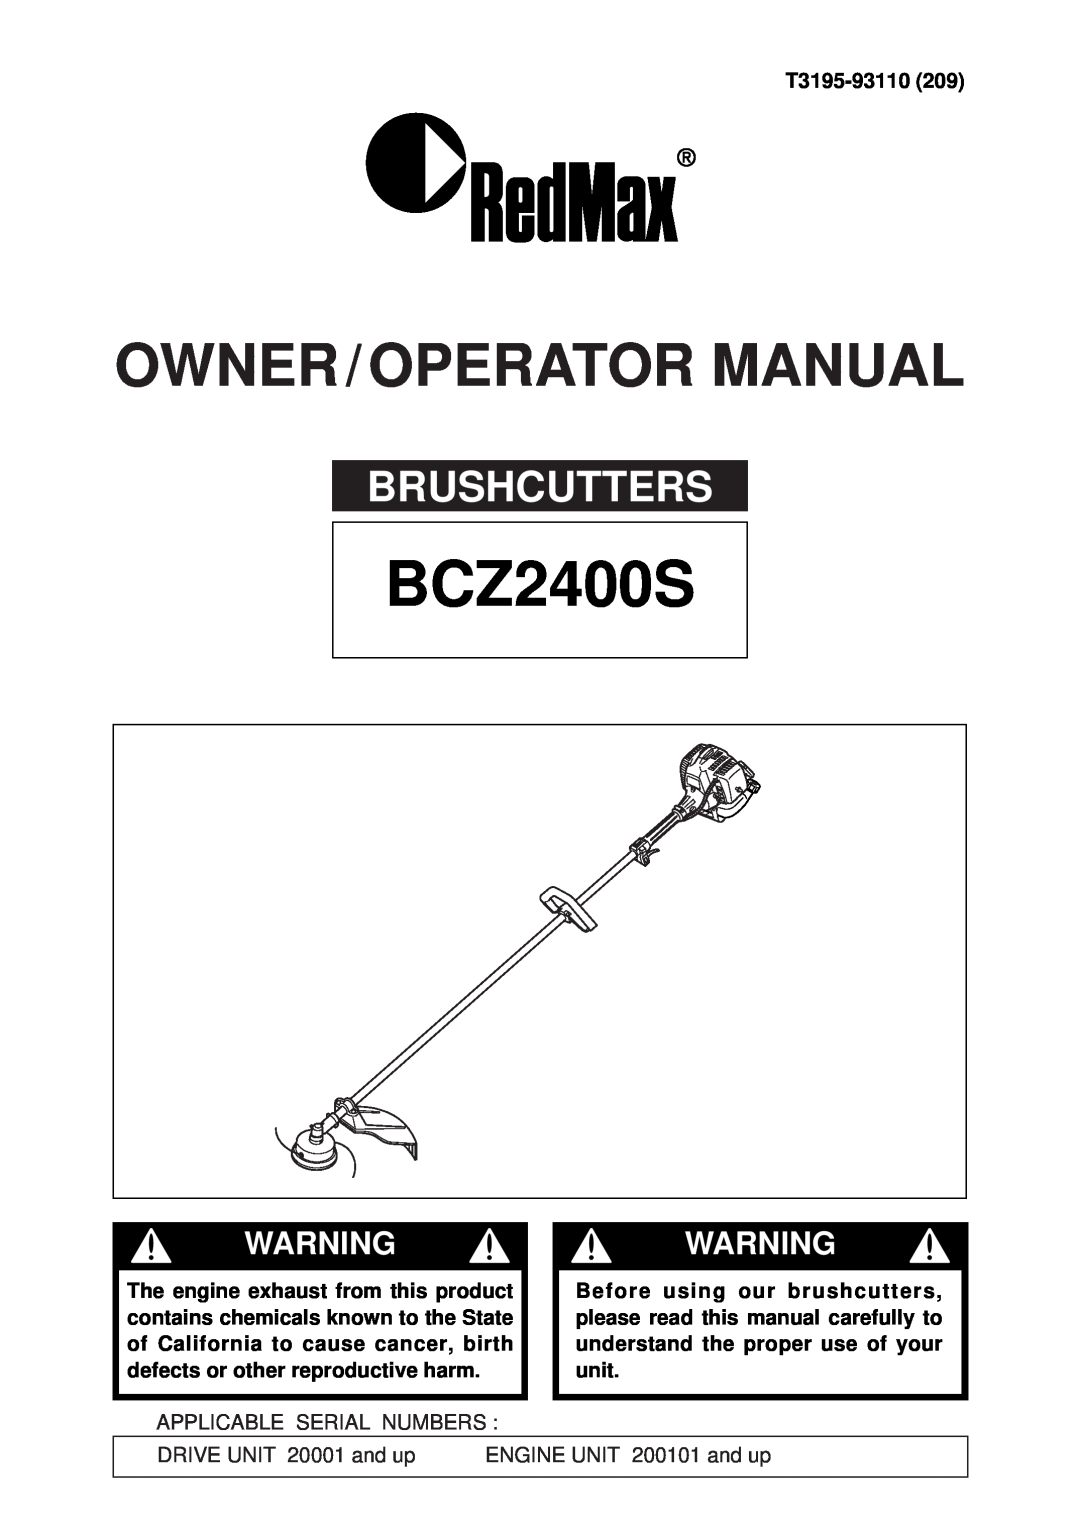 RedMax BCZ2400S manual Brushcutters, Owner / Operator Manual, Warningwarning 